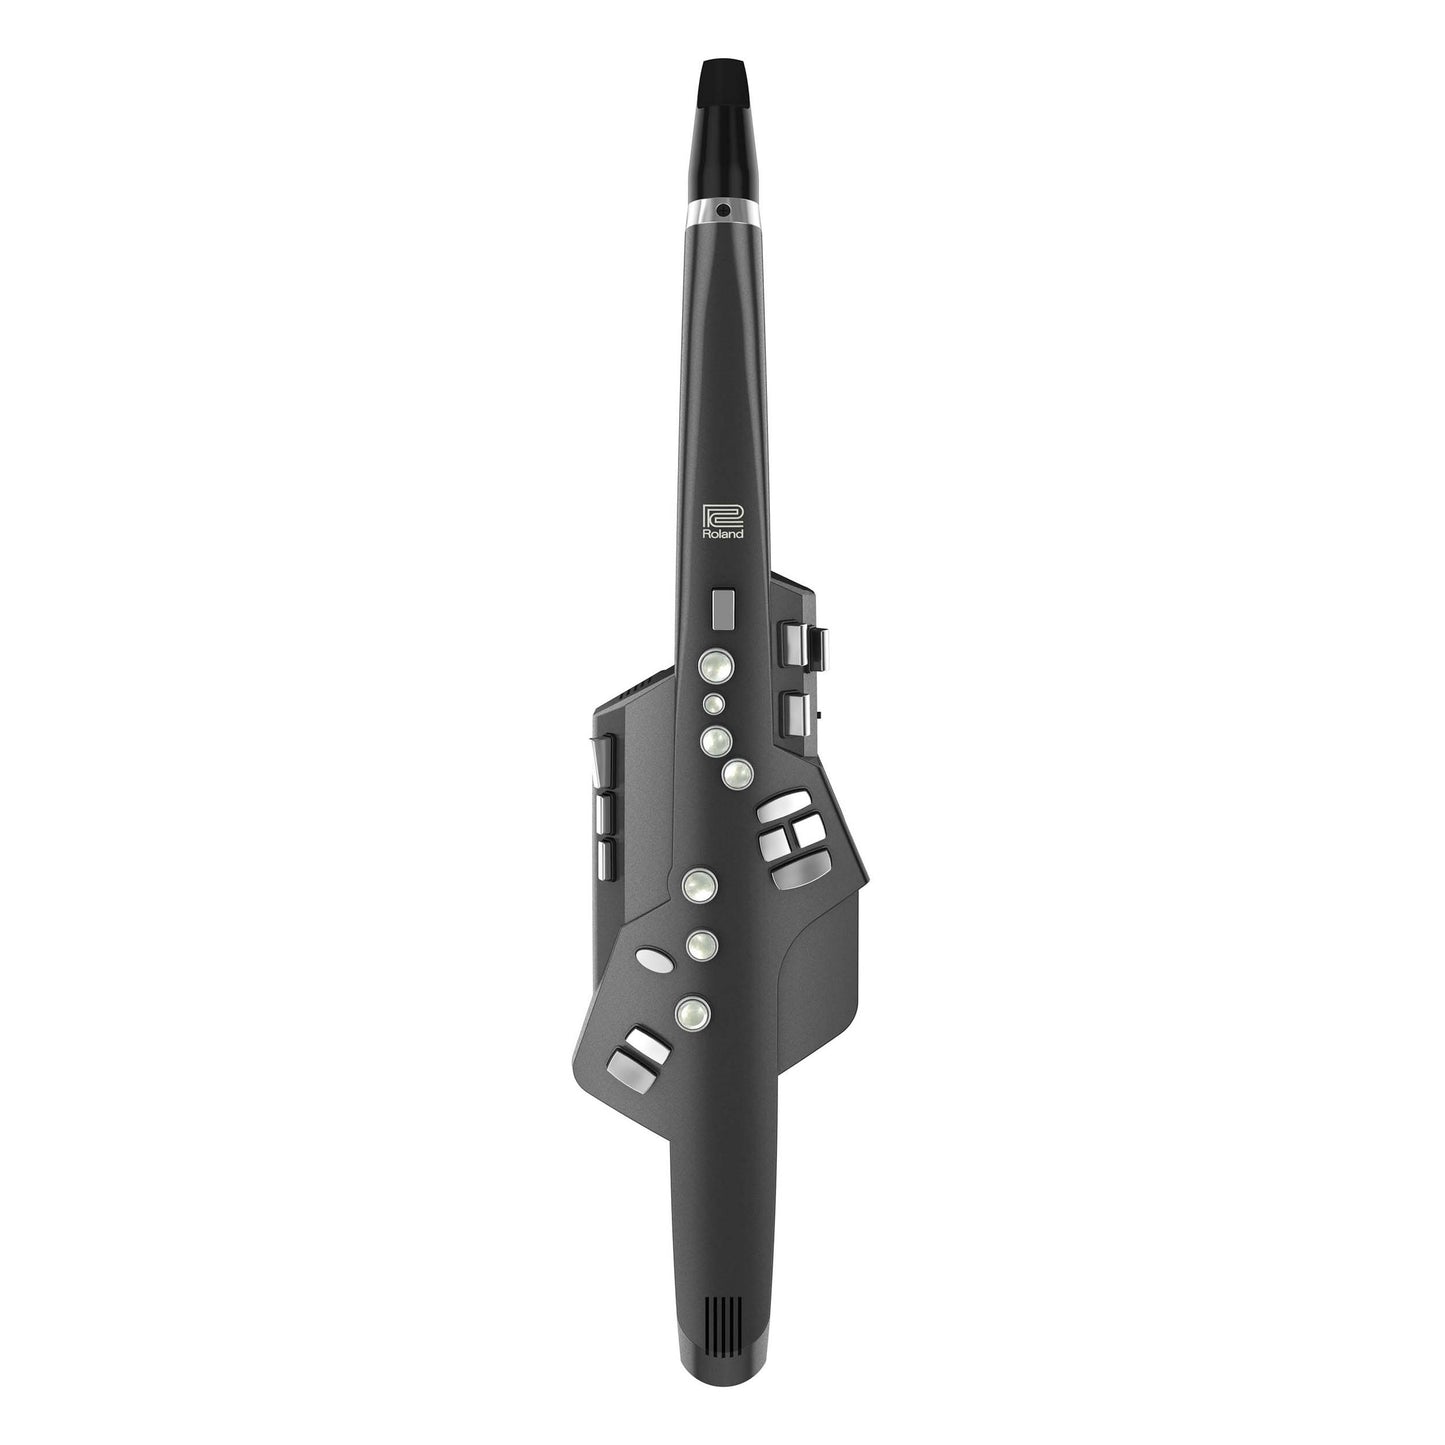 Roland Aerophone AE-10 Digital Wind Instrument (Graphite Black)